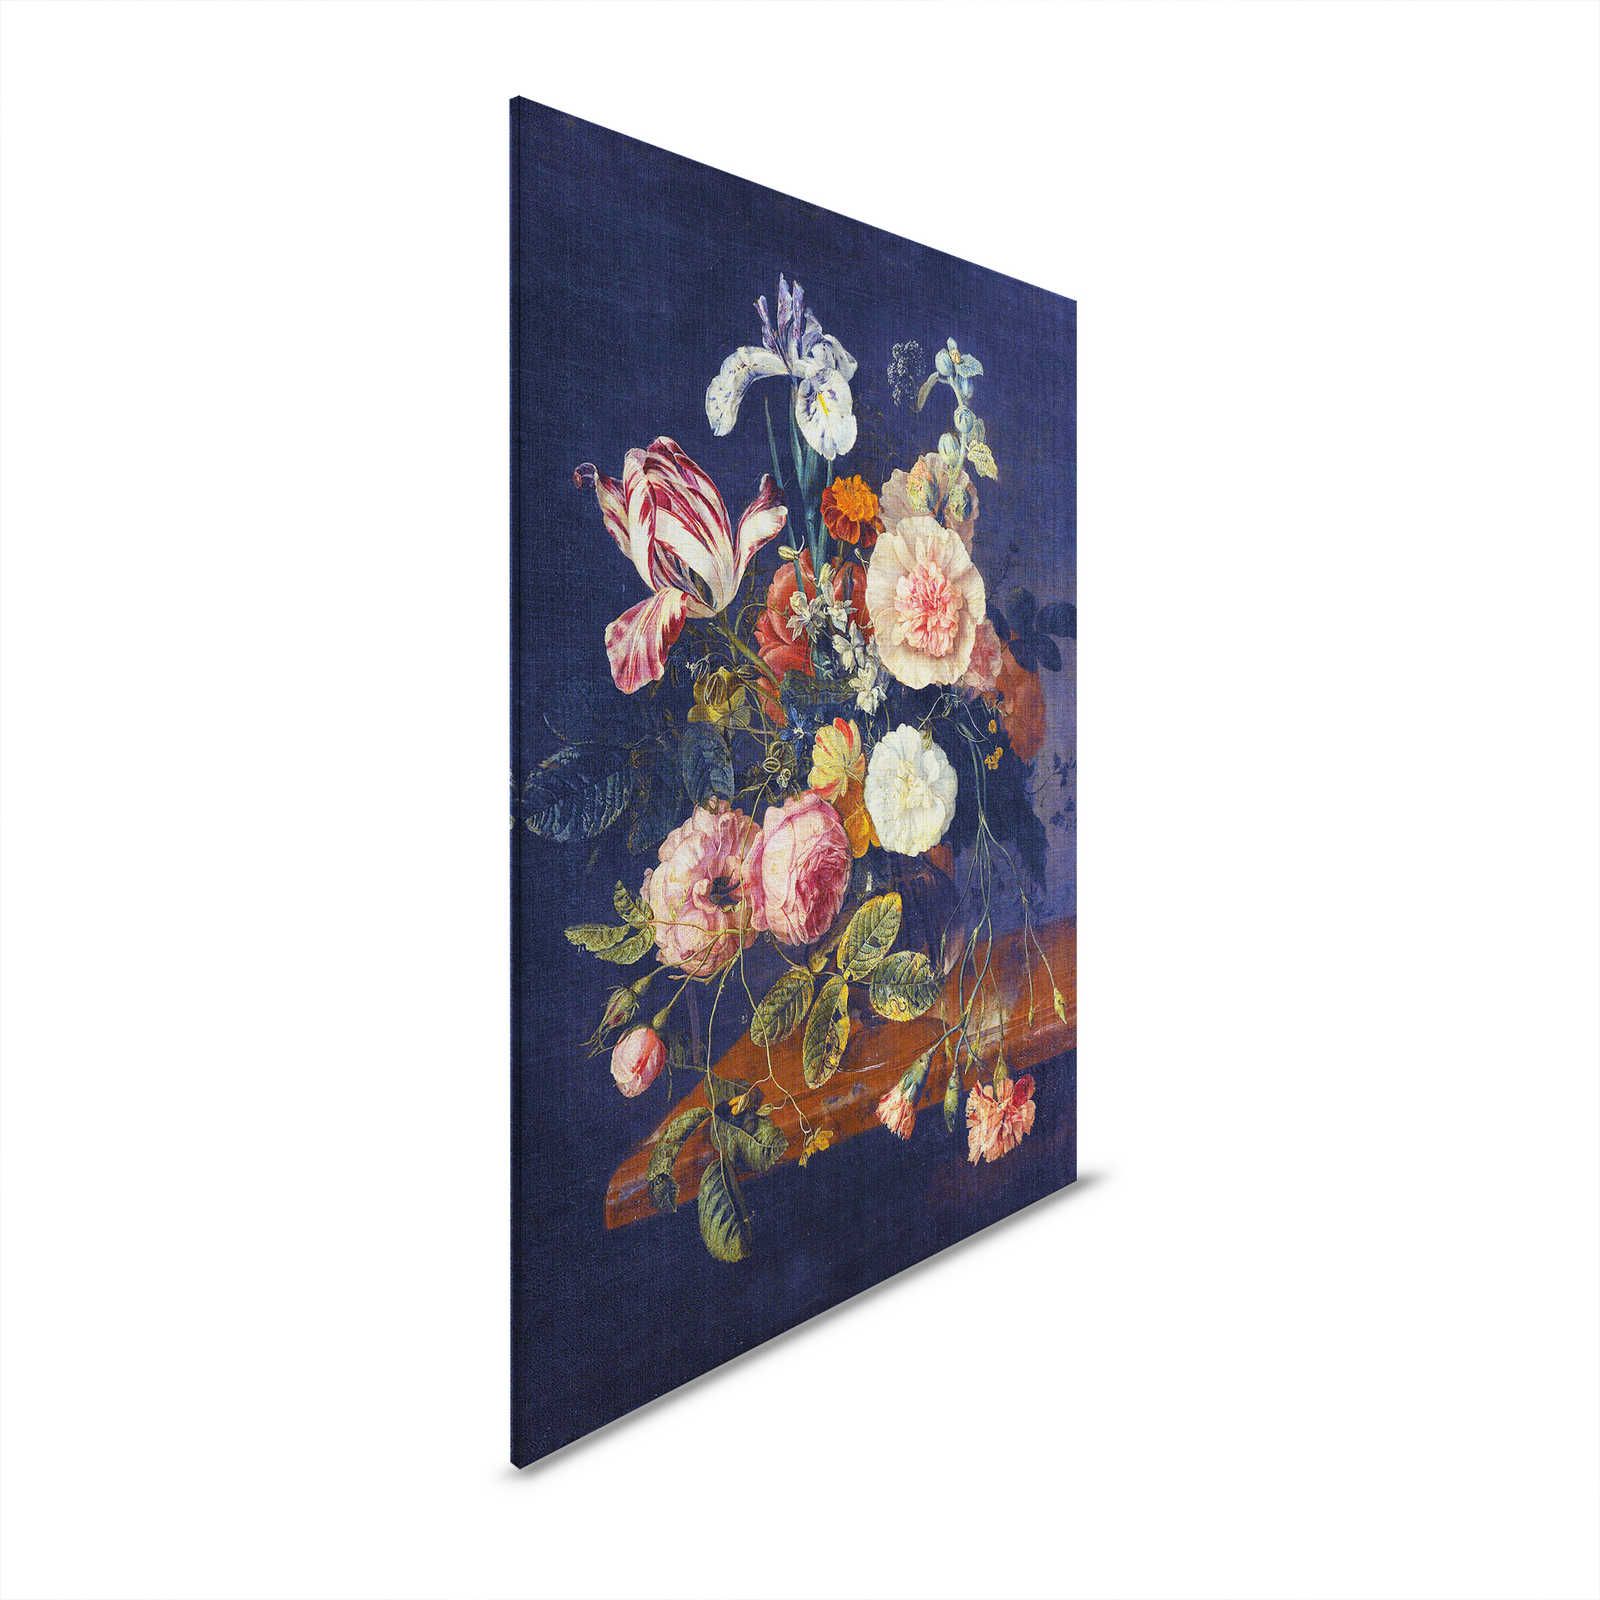         Artists Studio 1 - Leinwandbild Blumen Stillleben Dunkelblau – 0,60 m x 0,90 m
    